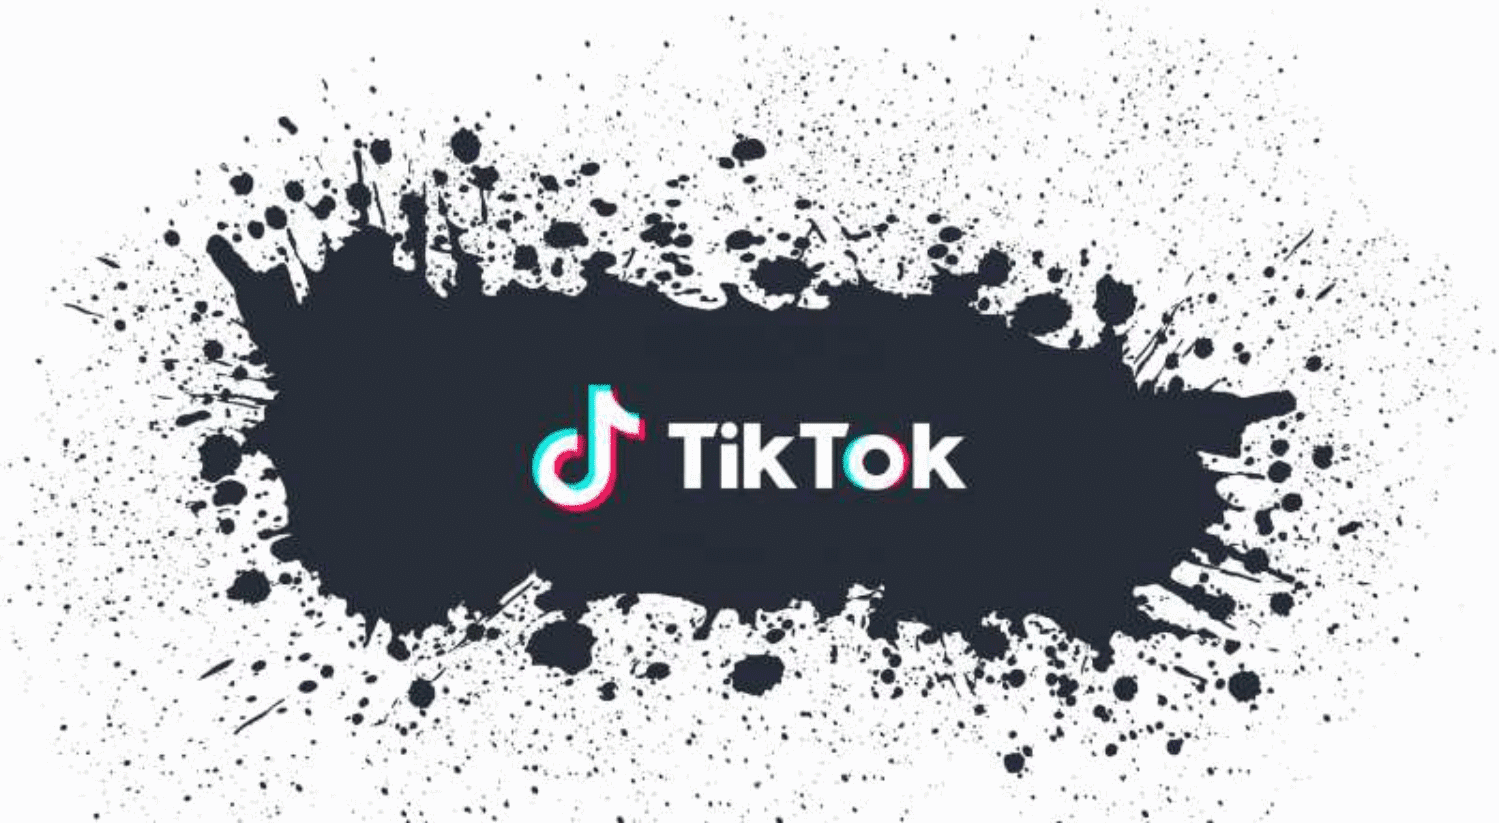 TikTok agrega 3 minutos a sus videos